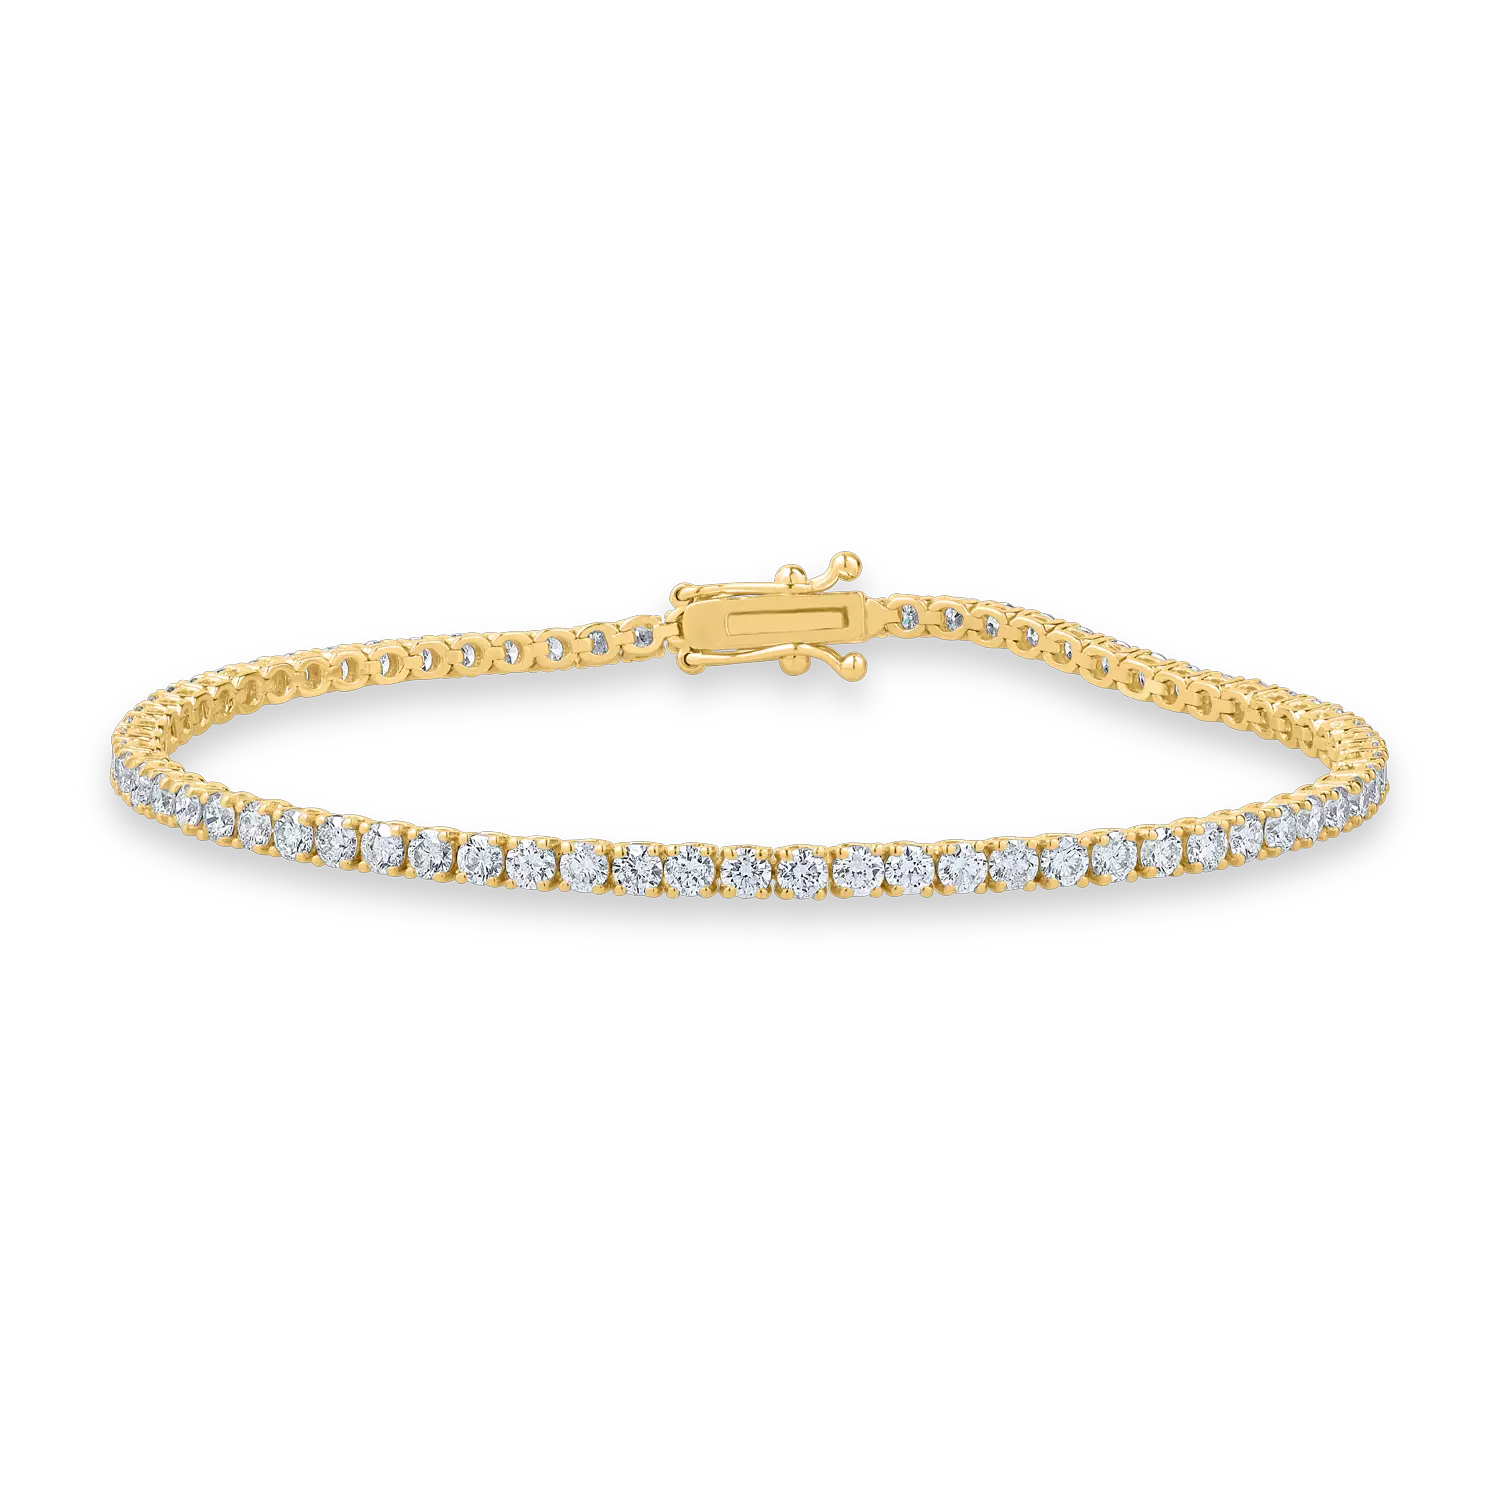 Yellow gold tennis bracelet with 3ct diamonds